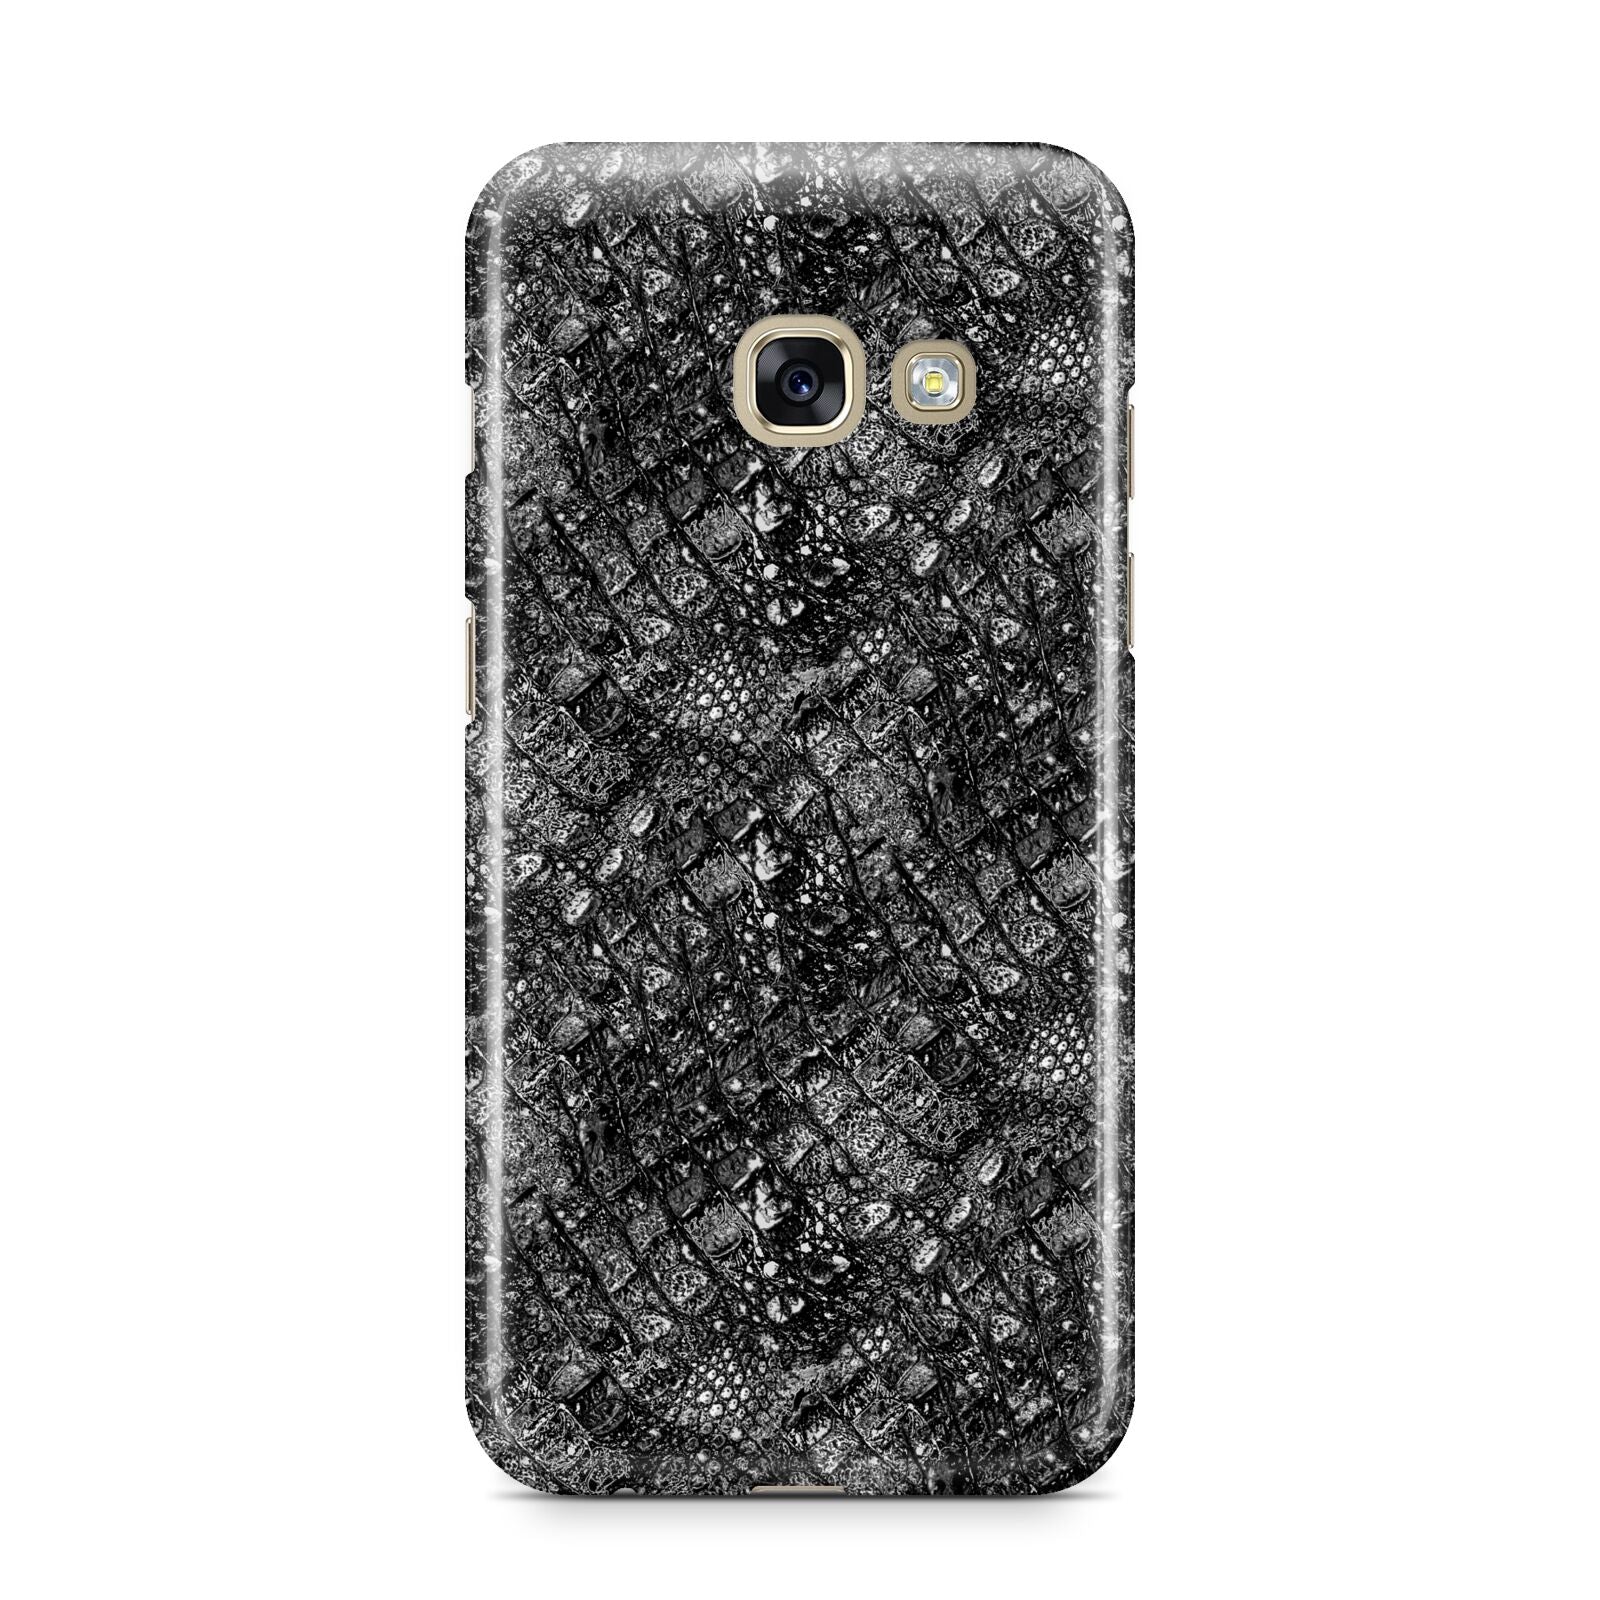 Snakeskin Design Samsung Galaxy A3 2017 Case on gold phone